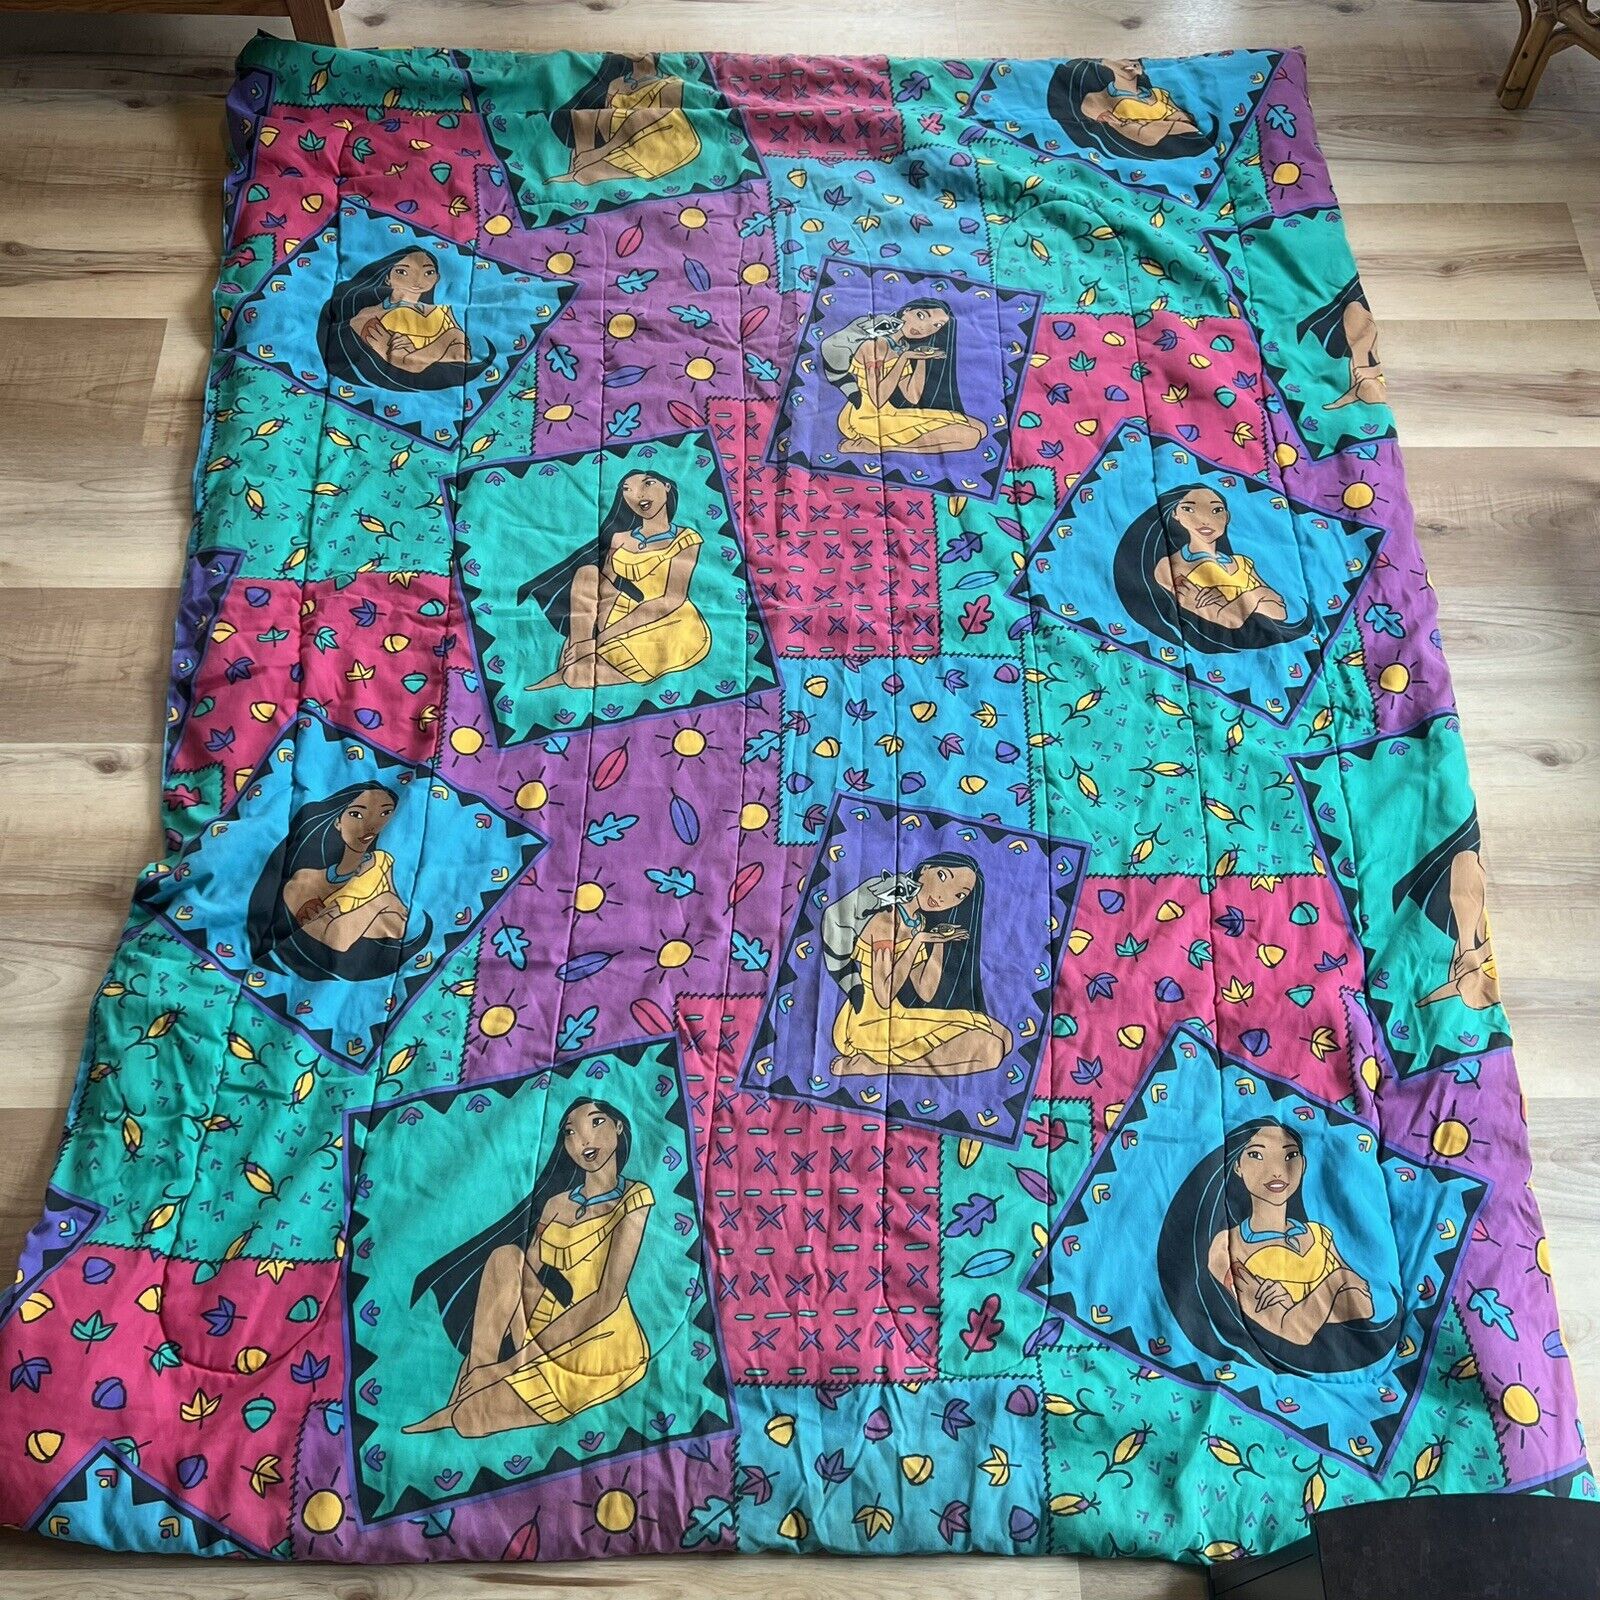 Vintage 90s Disney Pocahontas Reversible Twin Comforter Blanket 62x85 Colorful